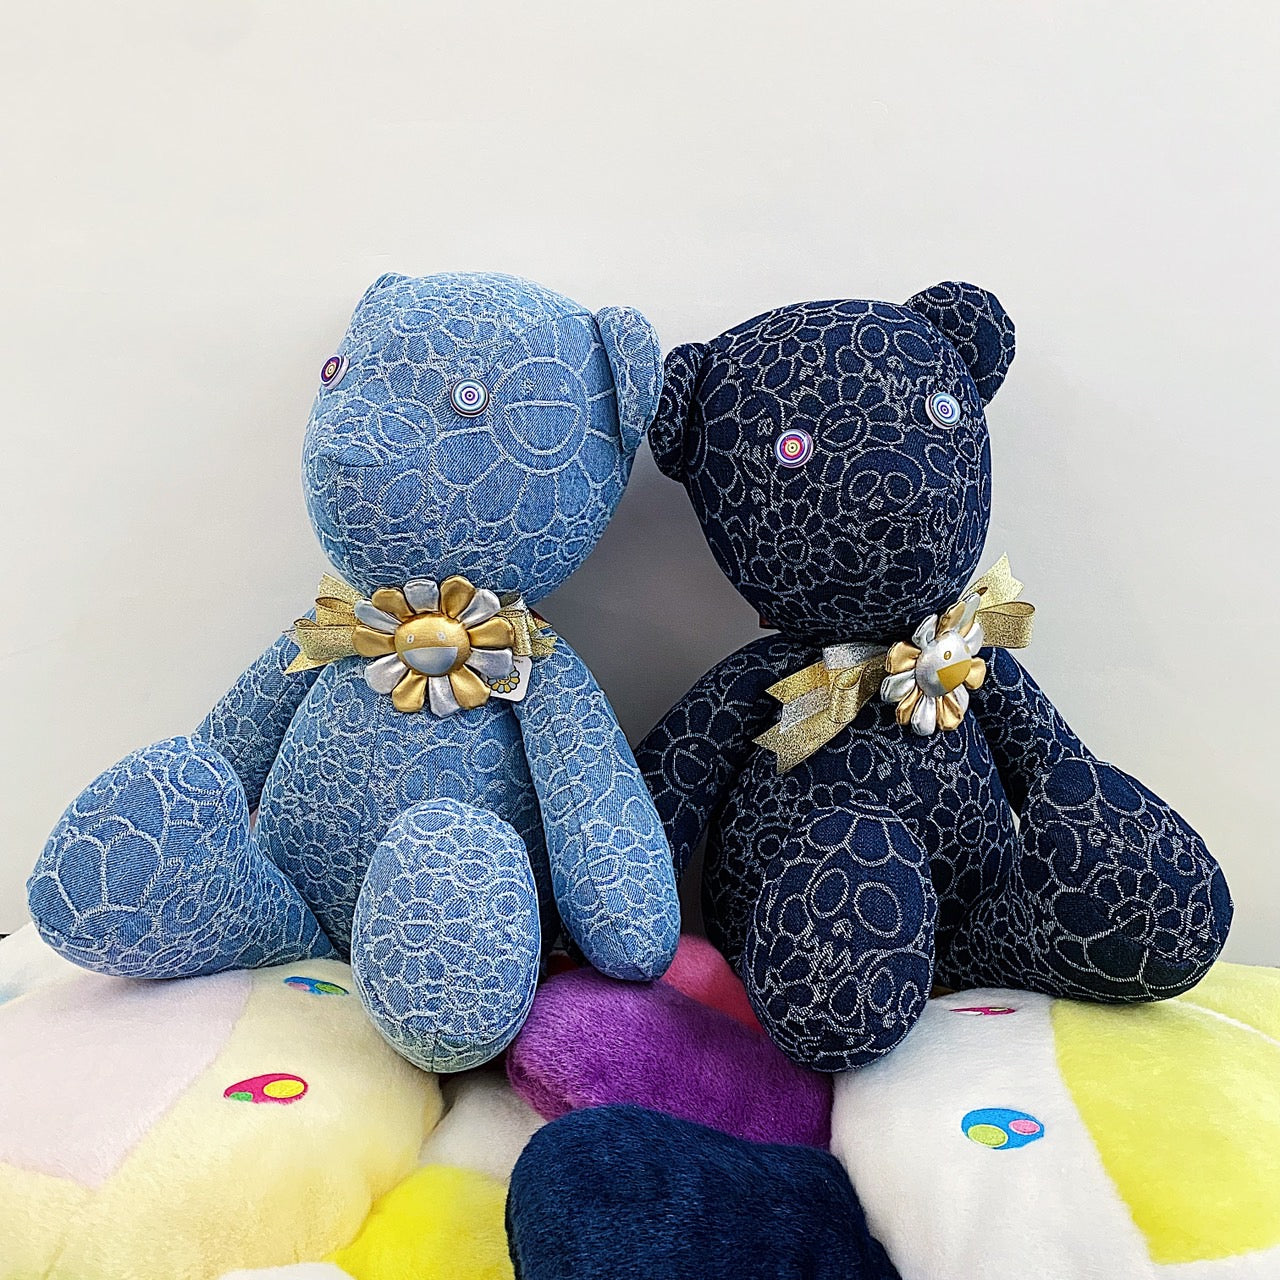 【©Takashi Murakami / kaikai kiki】<br> The adorable “Teddy Bear” from the popular denim series will be on sale online from 20:00 today, December 21st (Thursday)!